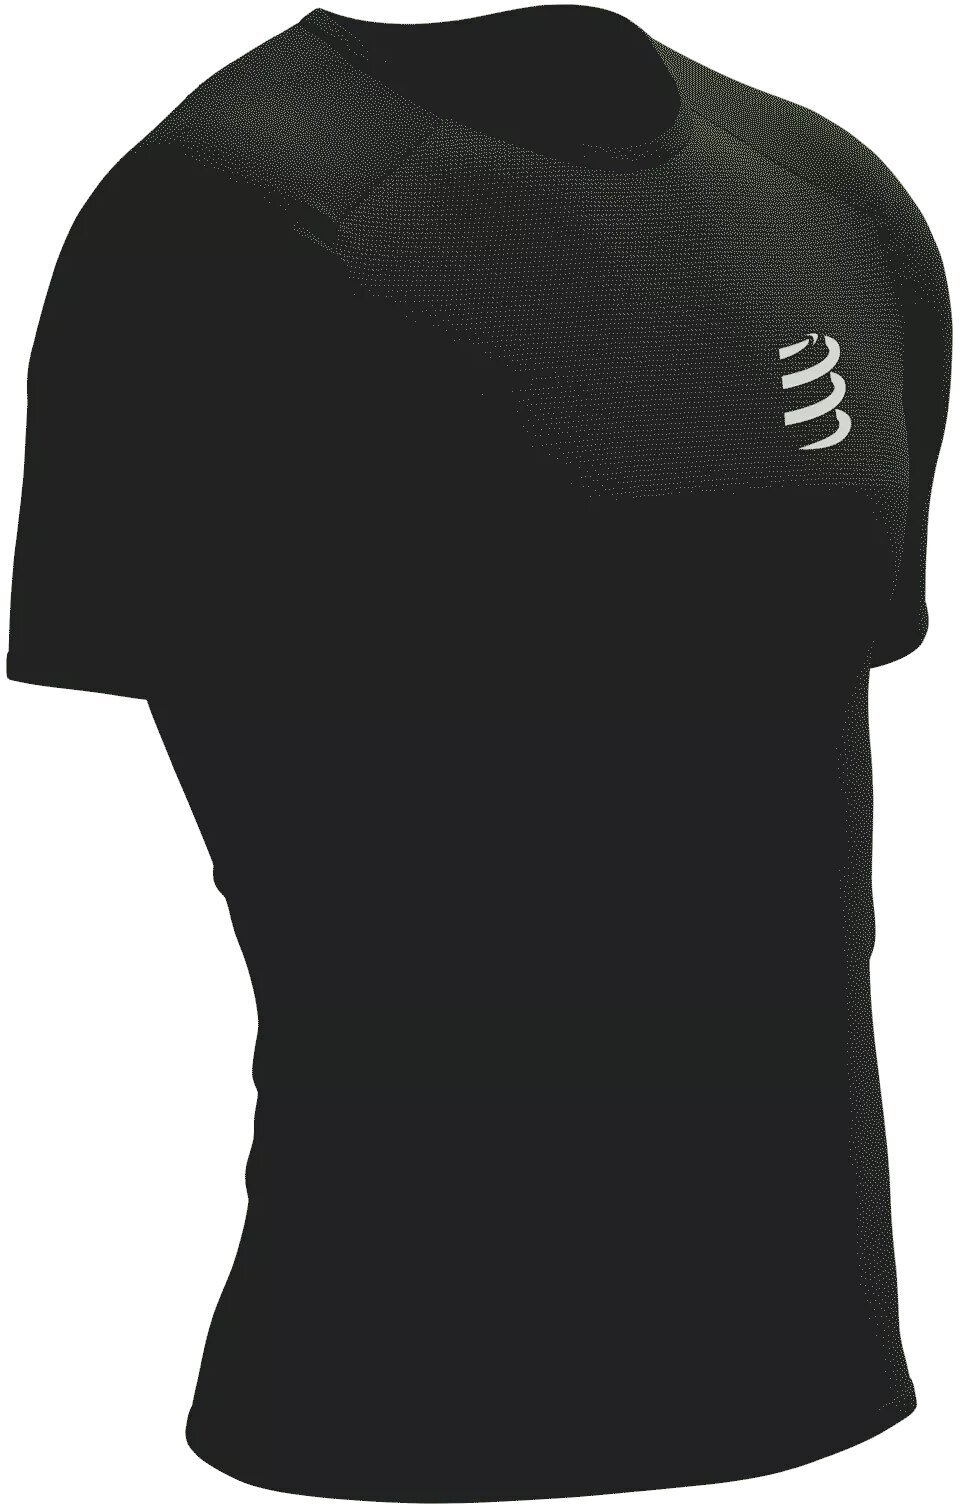 Running t-shirt with short sleeves
 Compressport Performance SS Tshirt M Black/White XL Running t-shirt with short sleeves